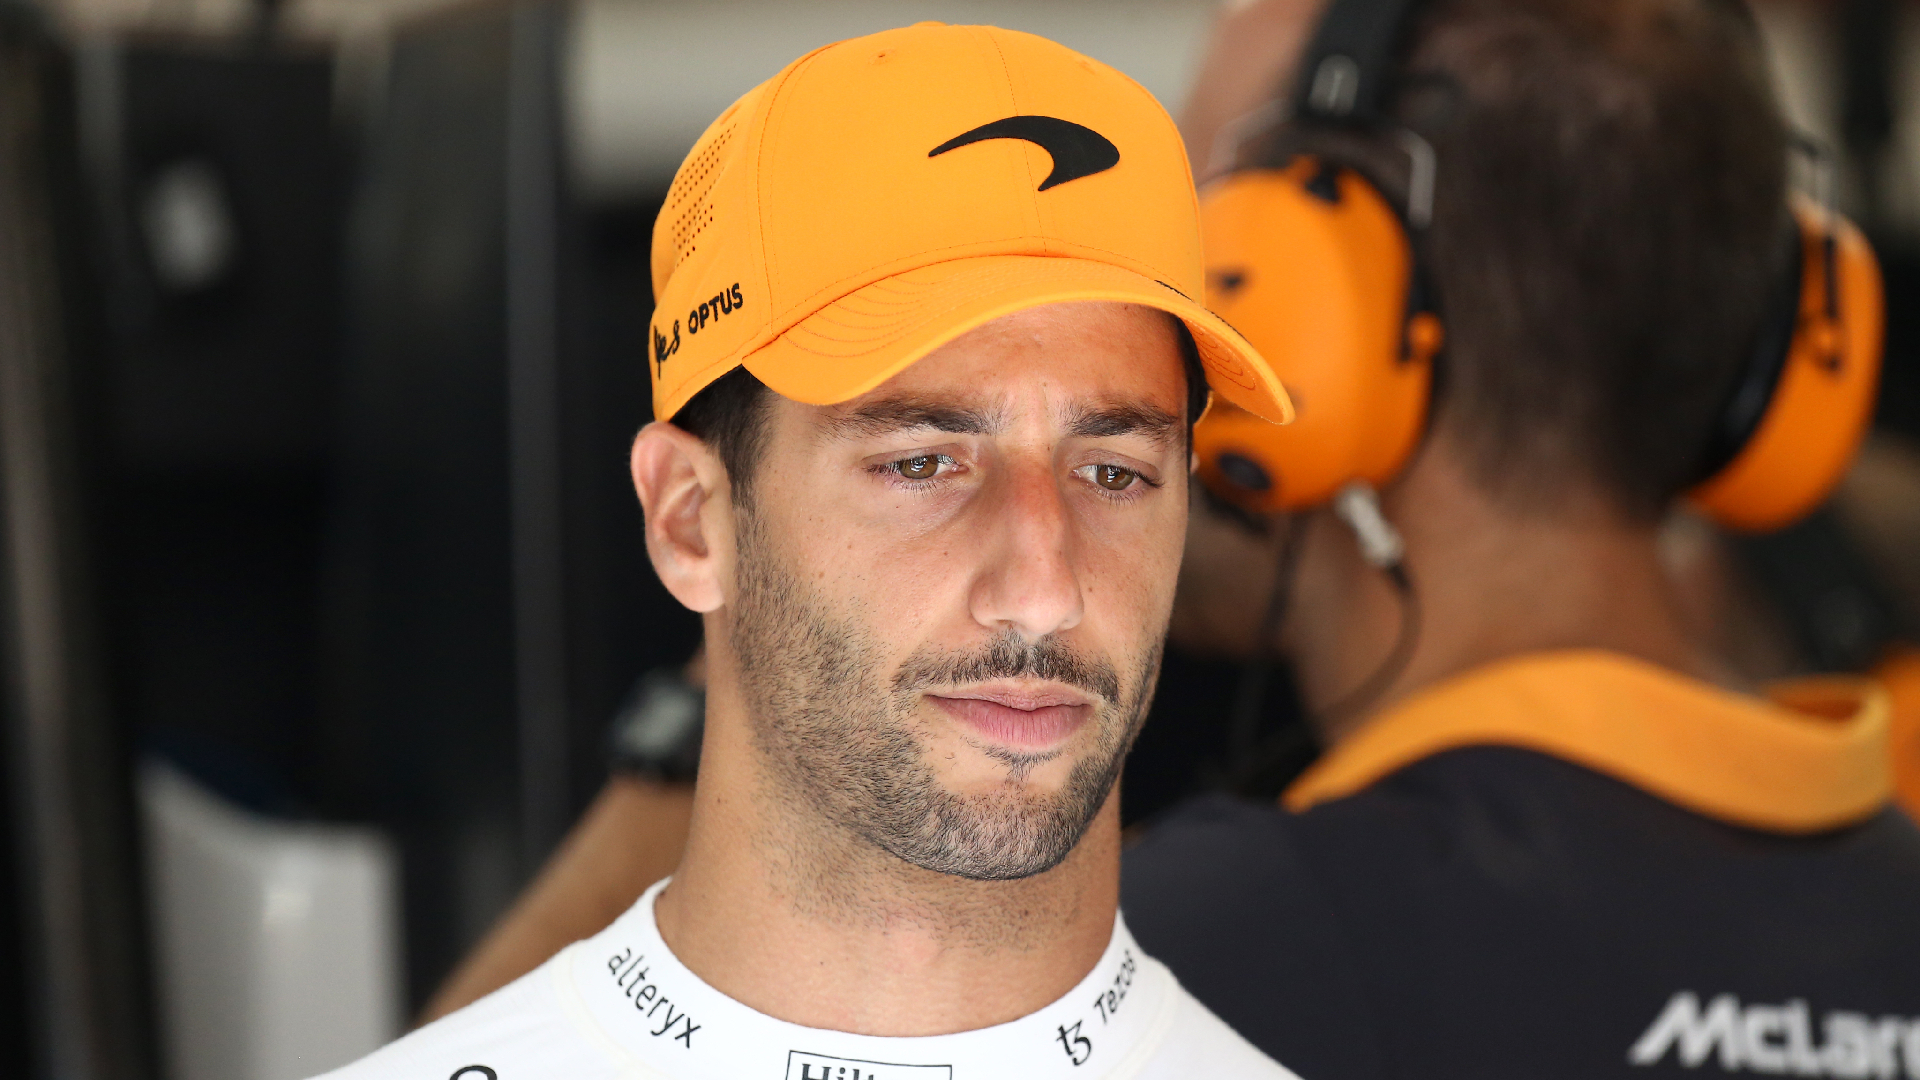 Daniel Ricciardo Next Team: Where Will He Race Post-McLaren?